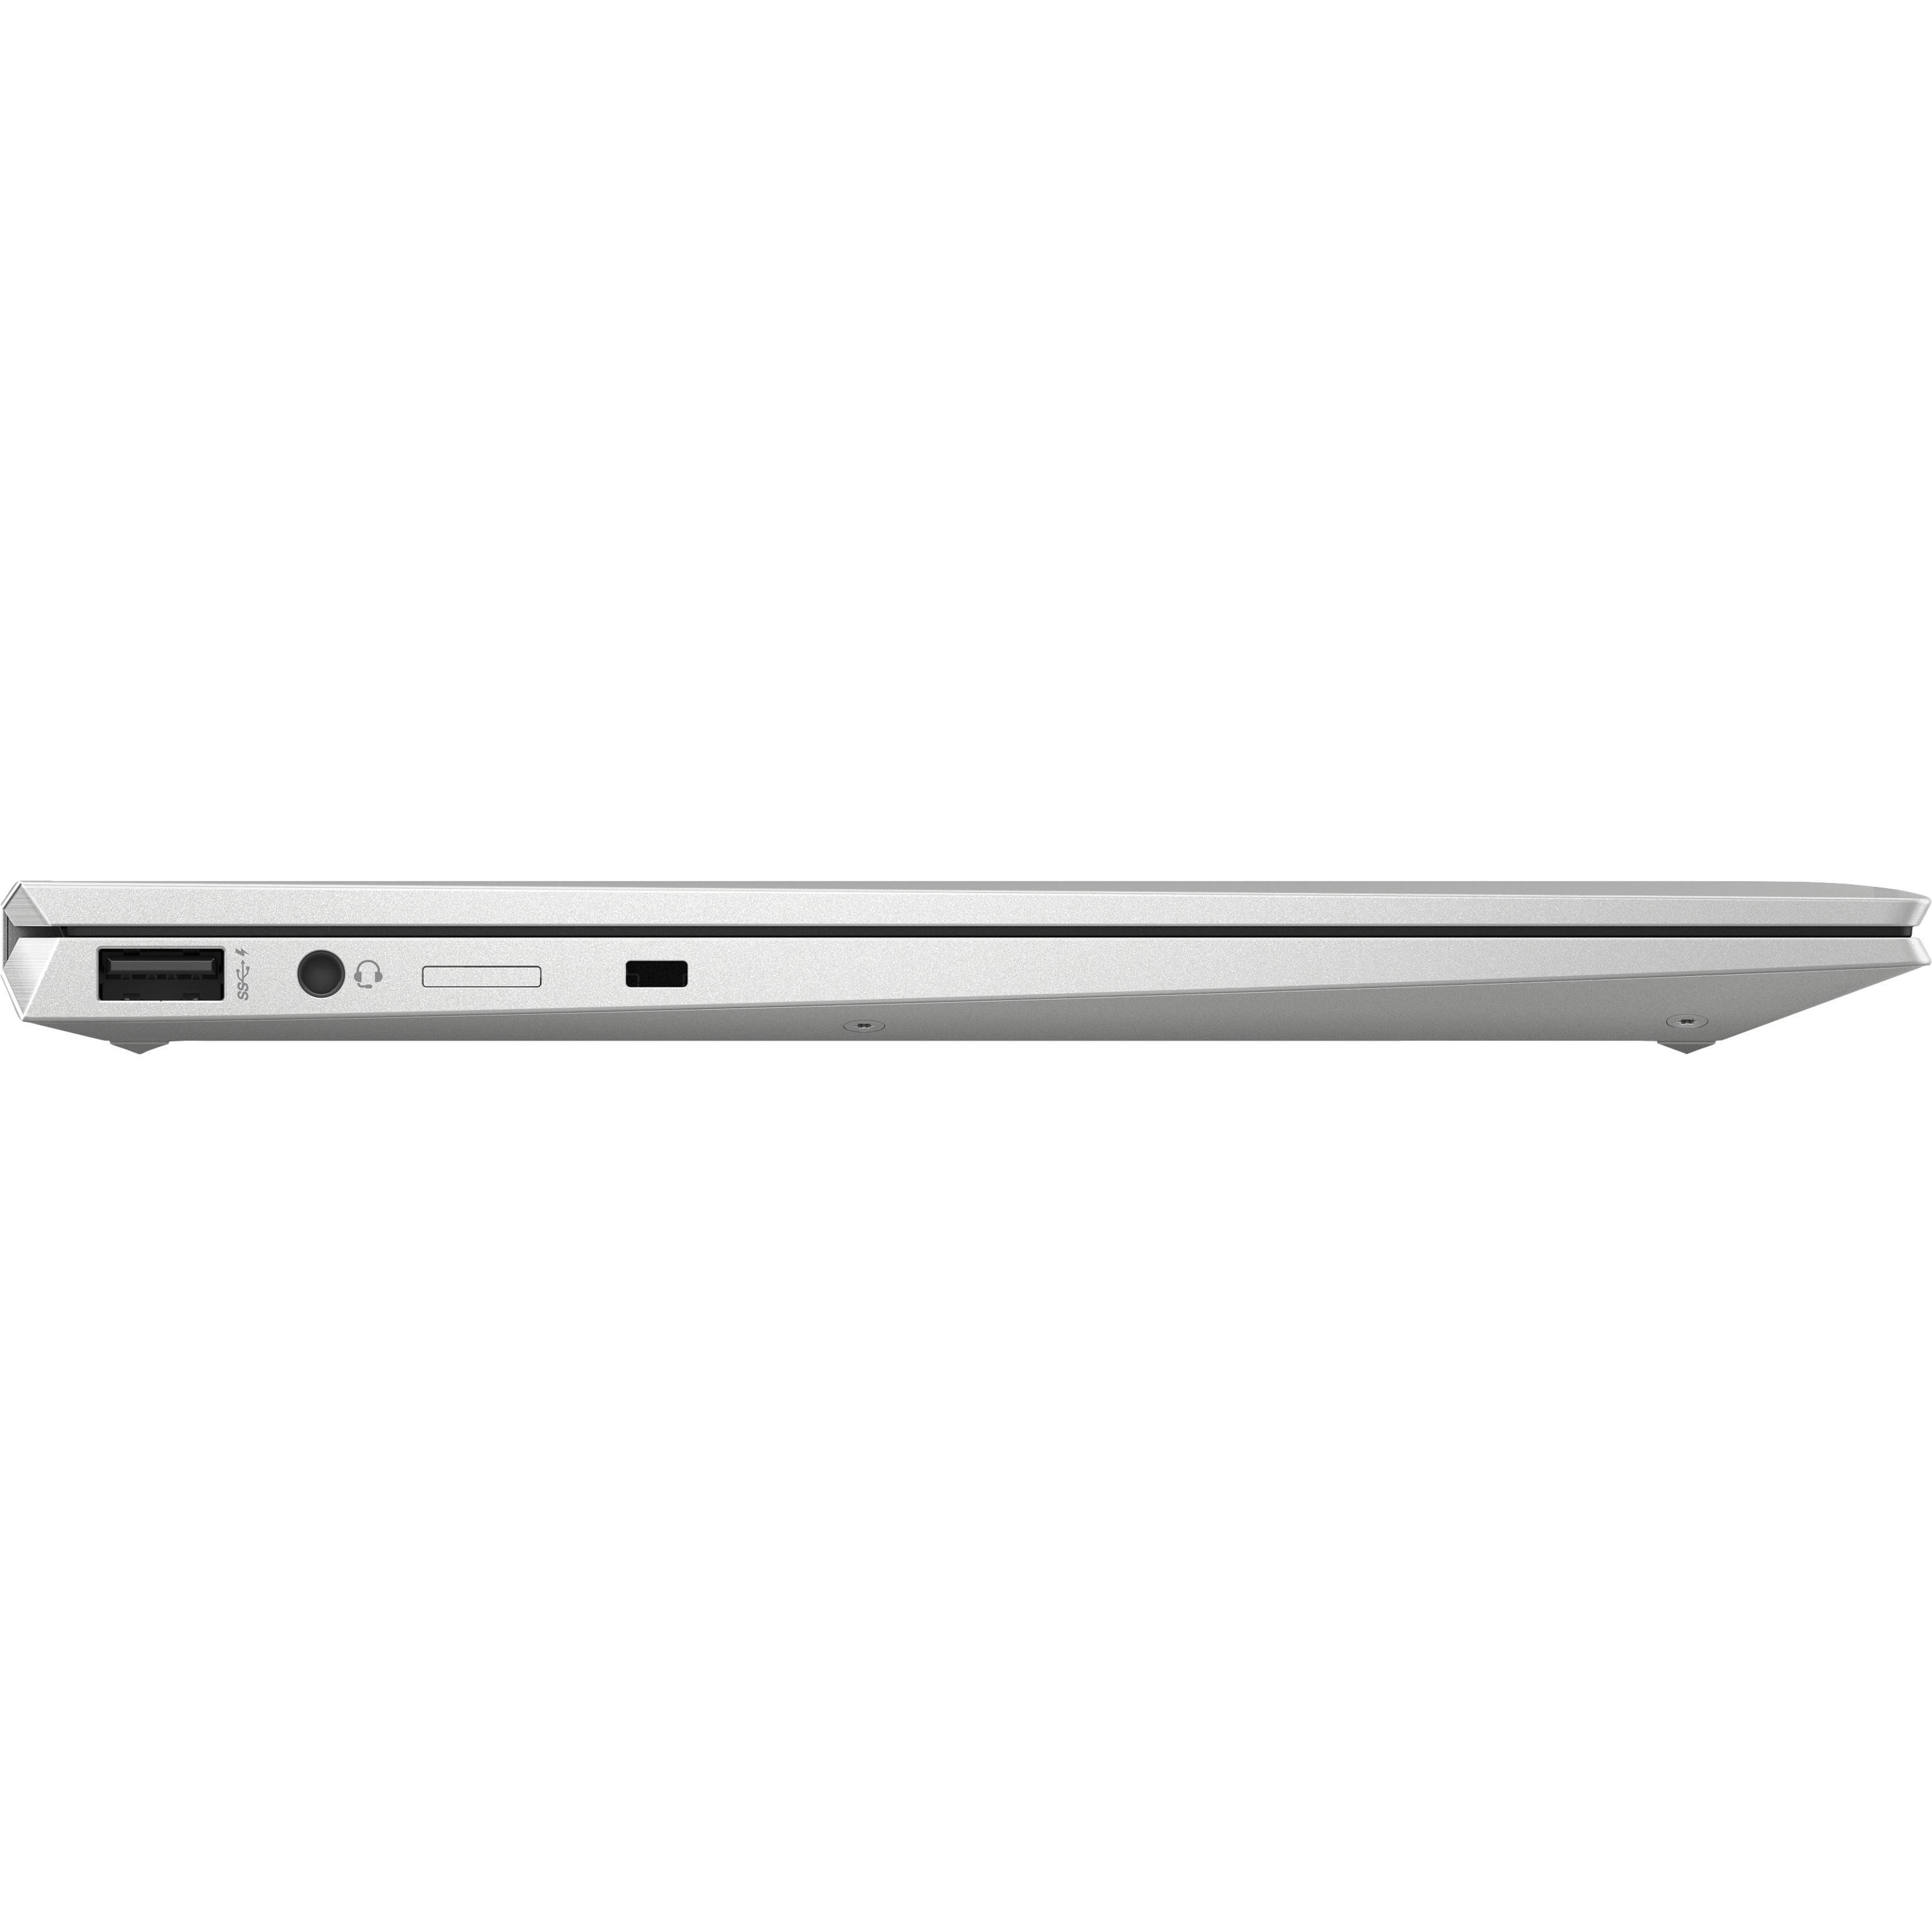 HP EliteBook x360 13.3" Full HD Touchscreen 2-in-1 Laptop, Intel Core i5 i5-10210U, 128GB SSD, Windows 10 Pro - image 4 of 8